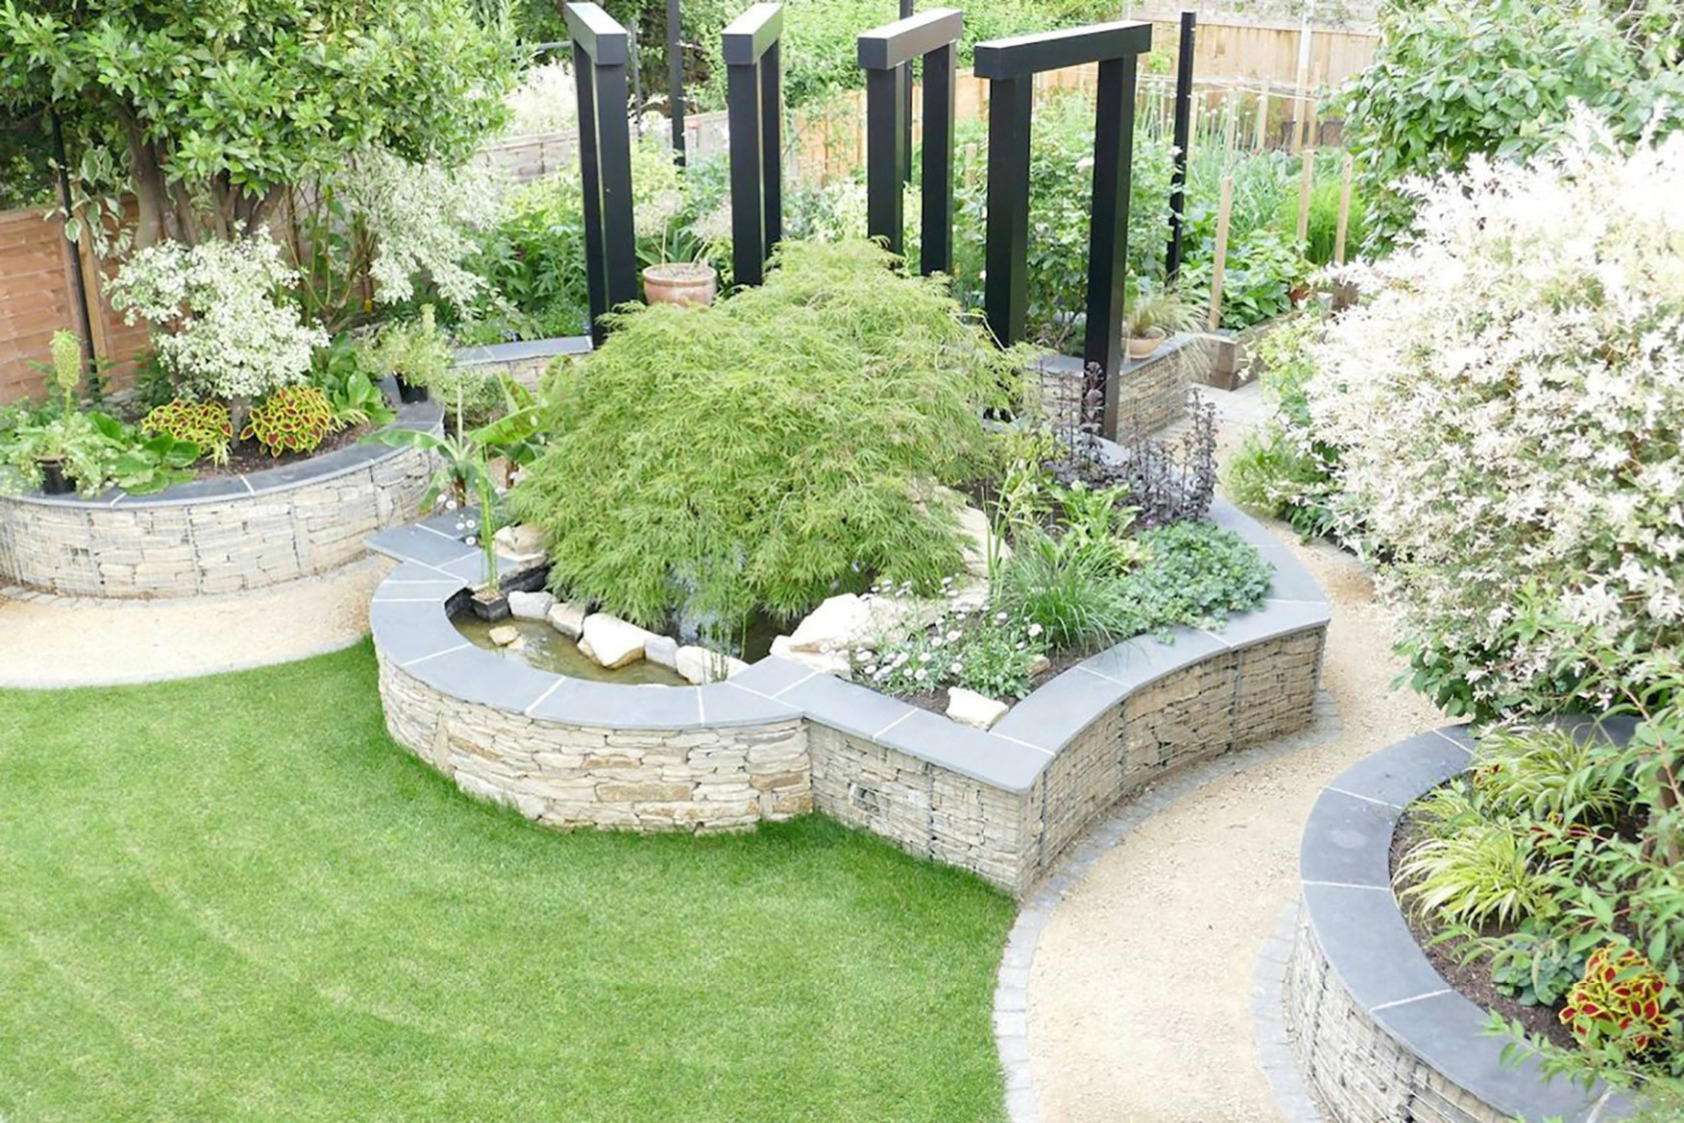 Garden design in St Albans, Hertfordshire with gabion retaining walls, steel pergola, and vegetable area.